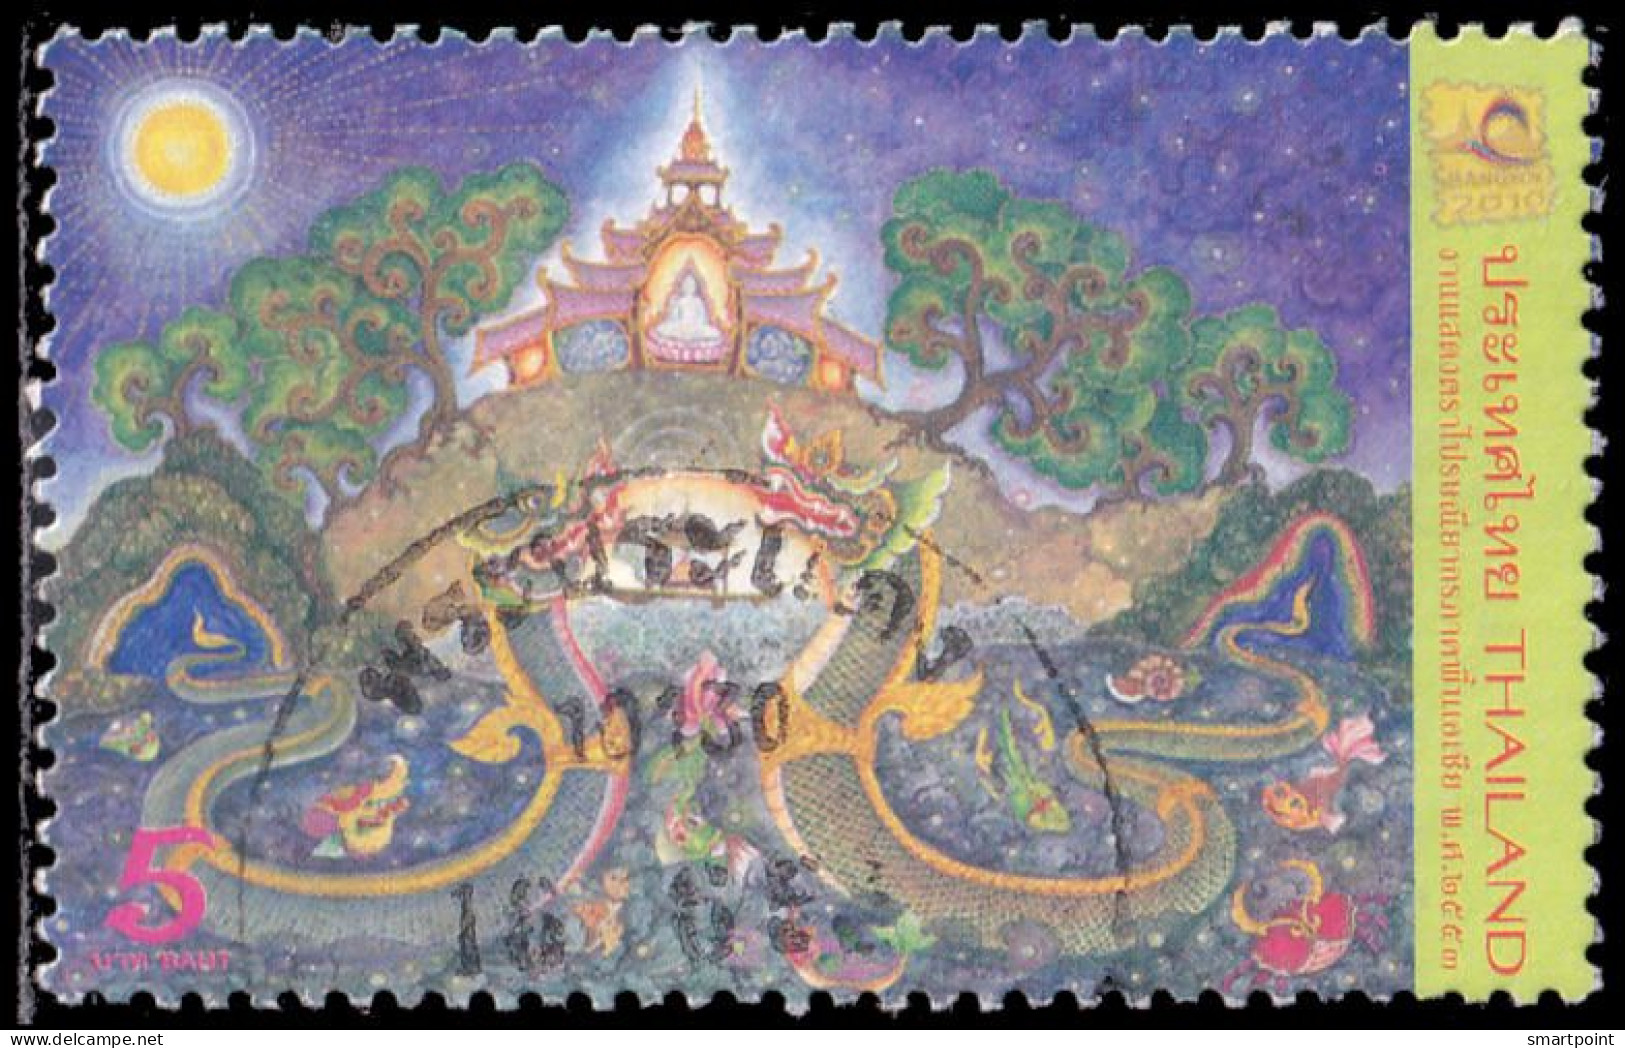 Thailand Stamp 2010 25th Asian International Stamp Exhibition (1st Series) 5 Baht - Used - Thaïlande